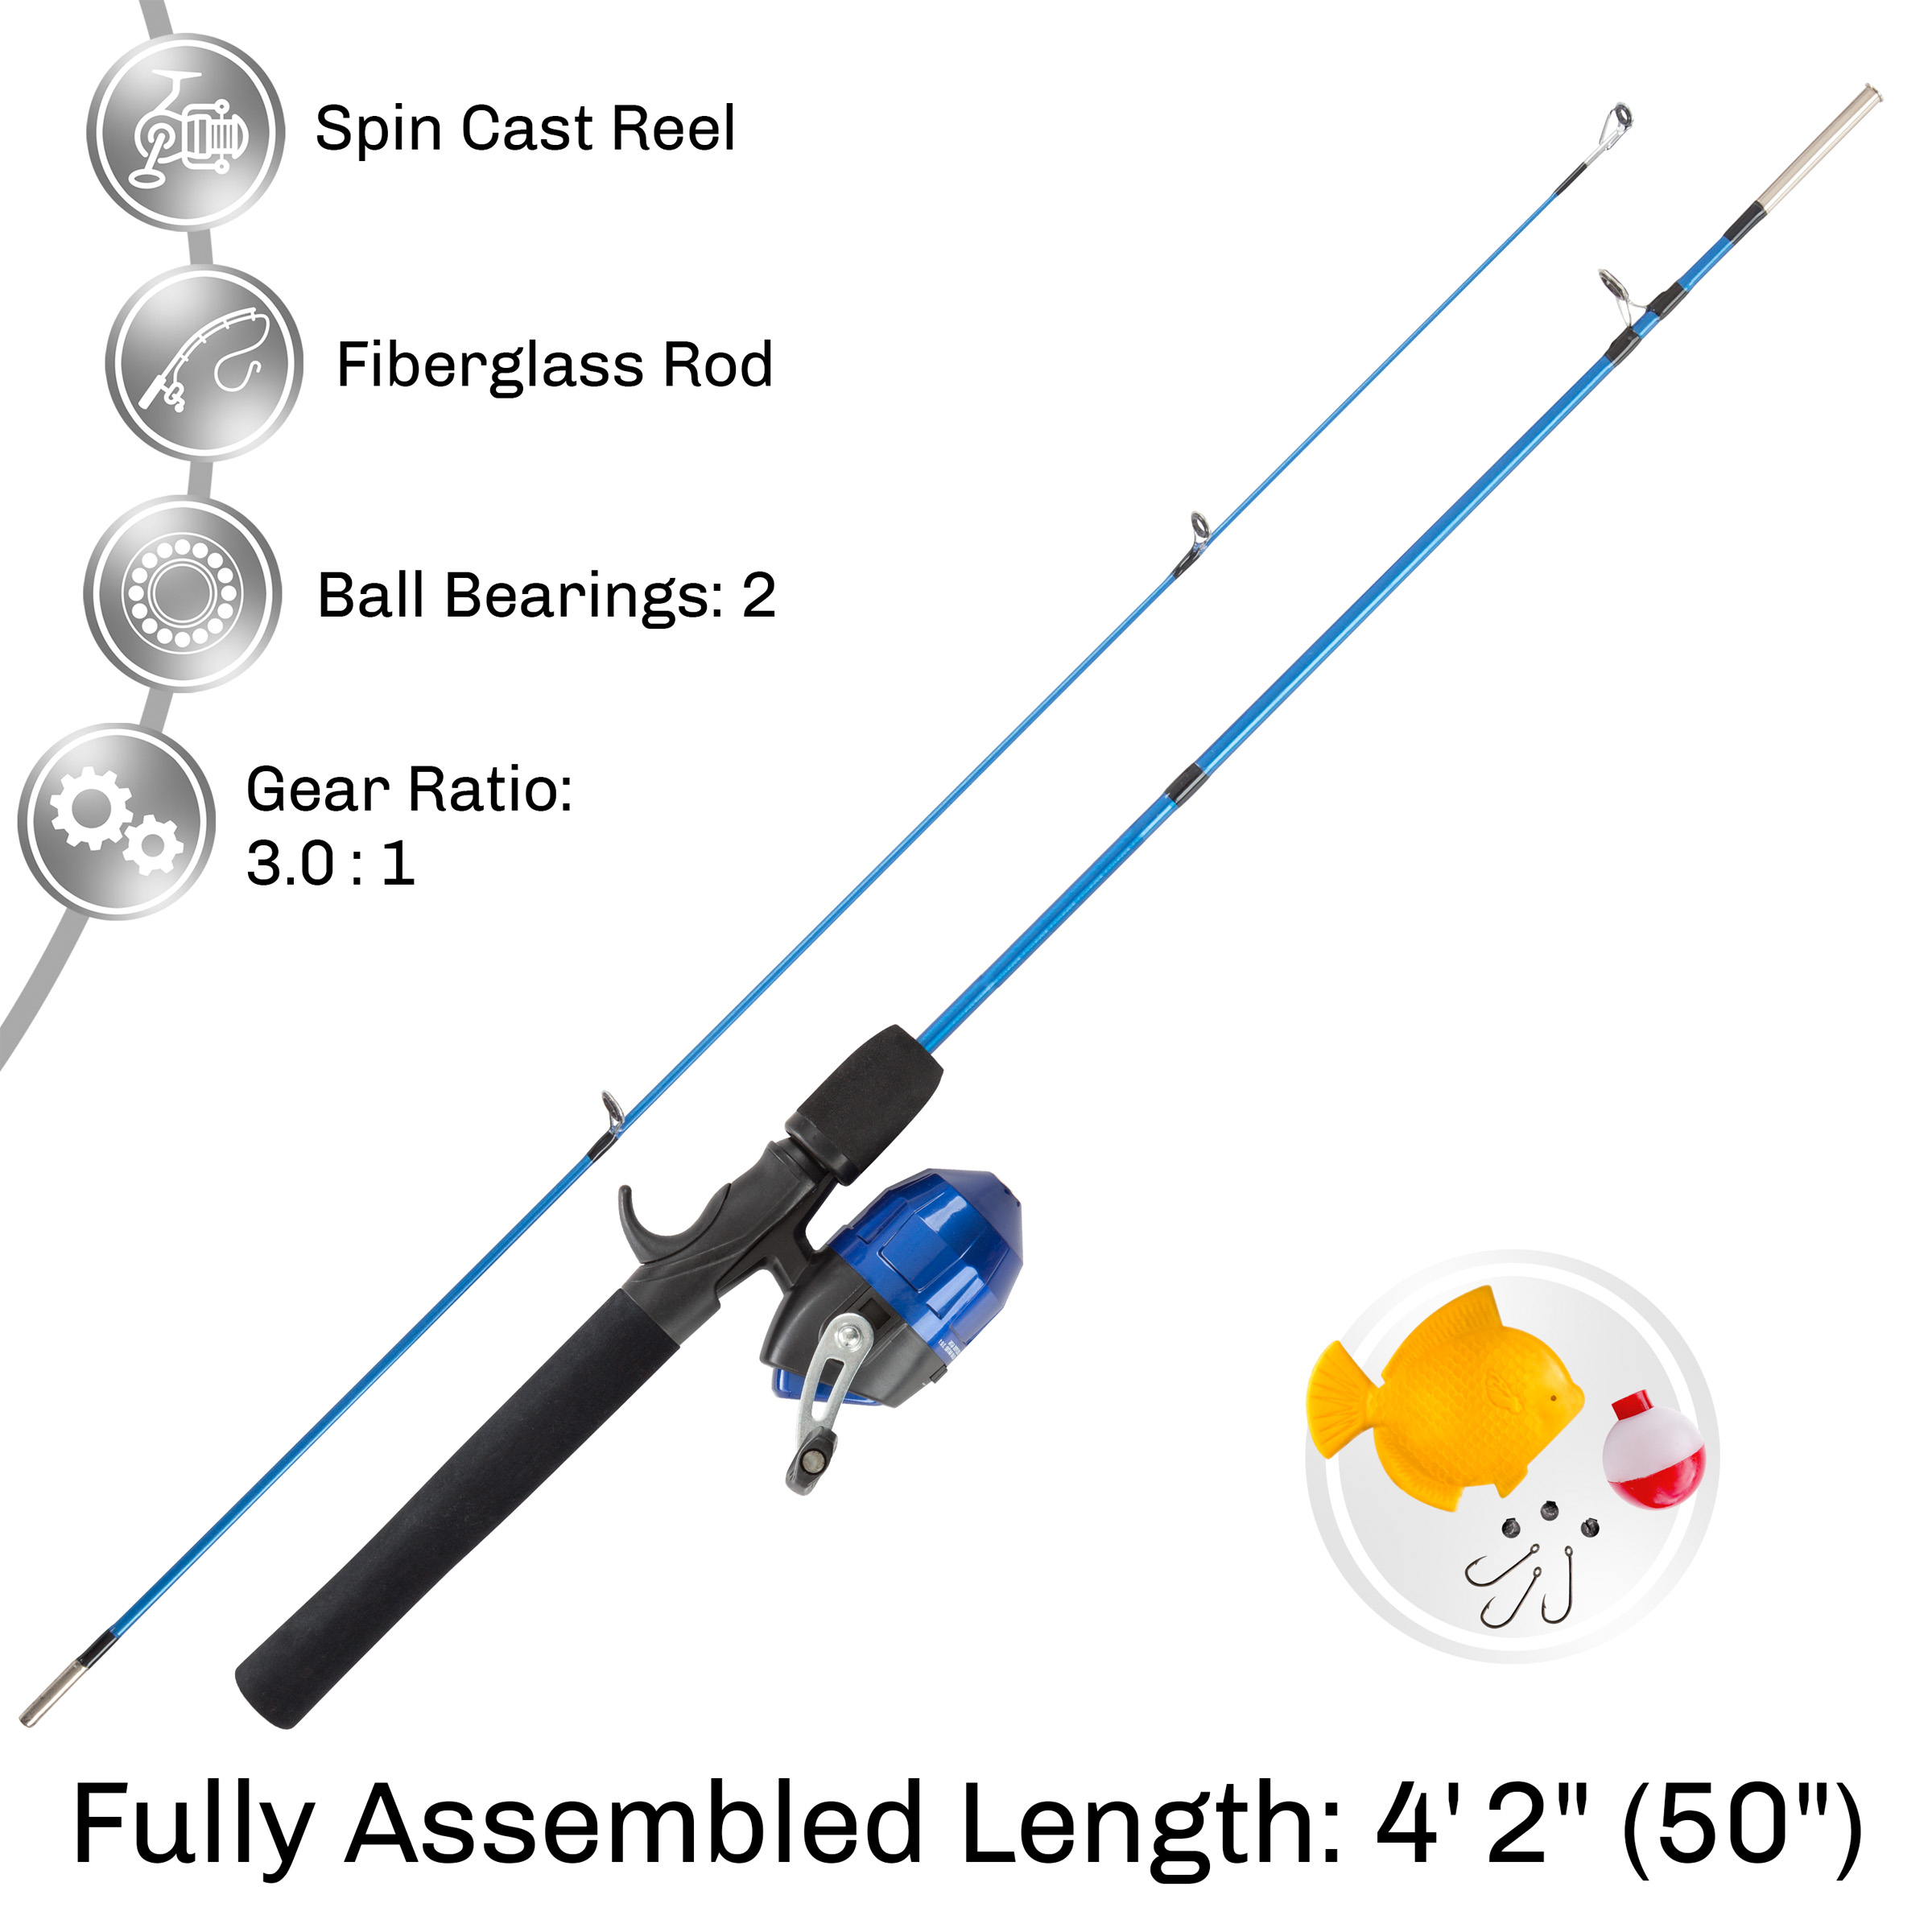 Push Button Spincast Kids Children Beginners Fishing Pole Starter Kit 4 Ft Rod And Reel - Blue